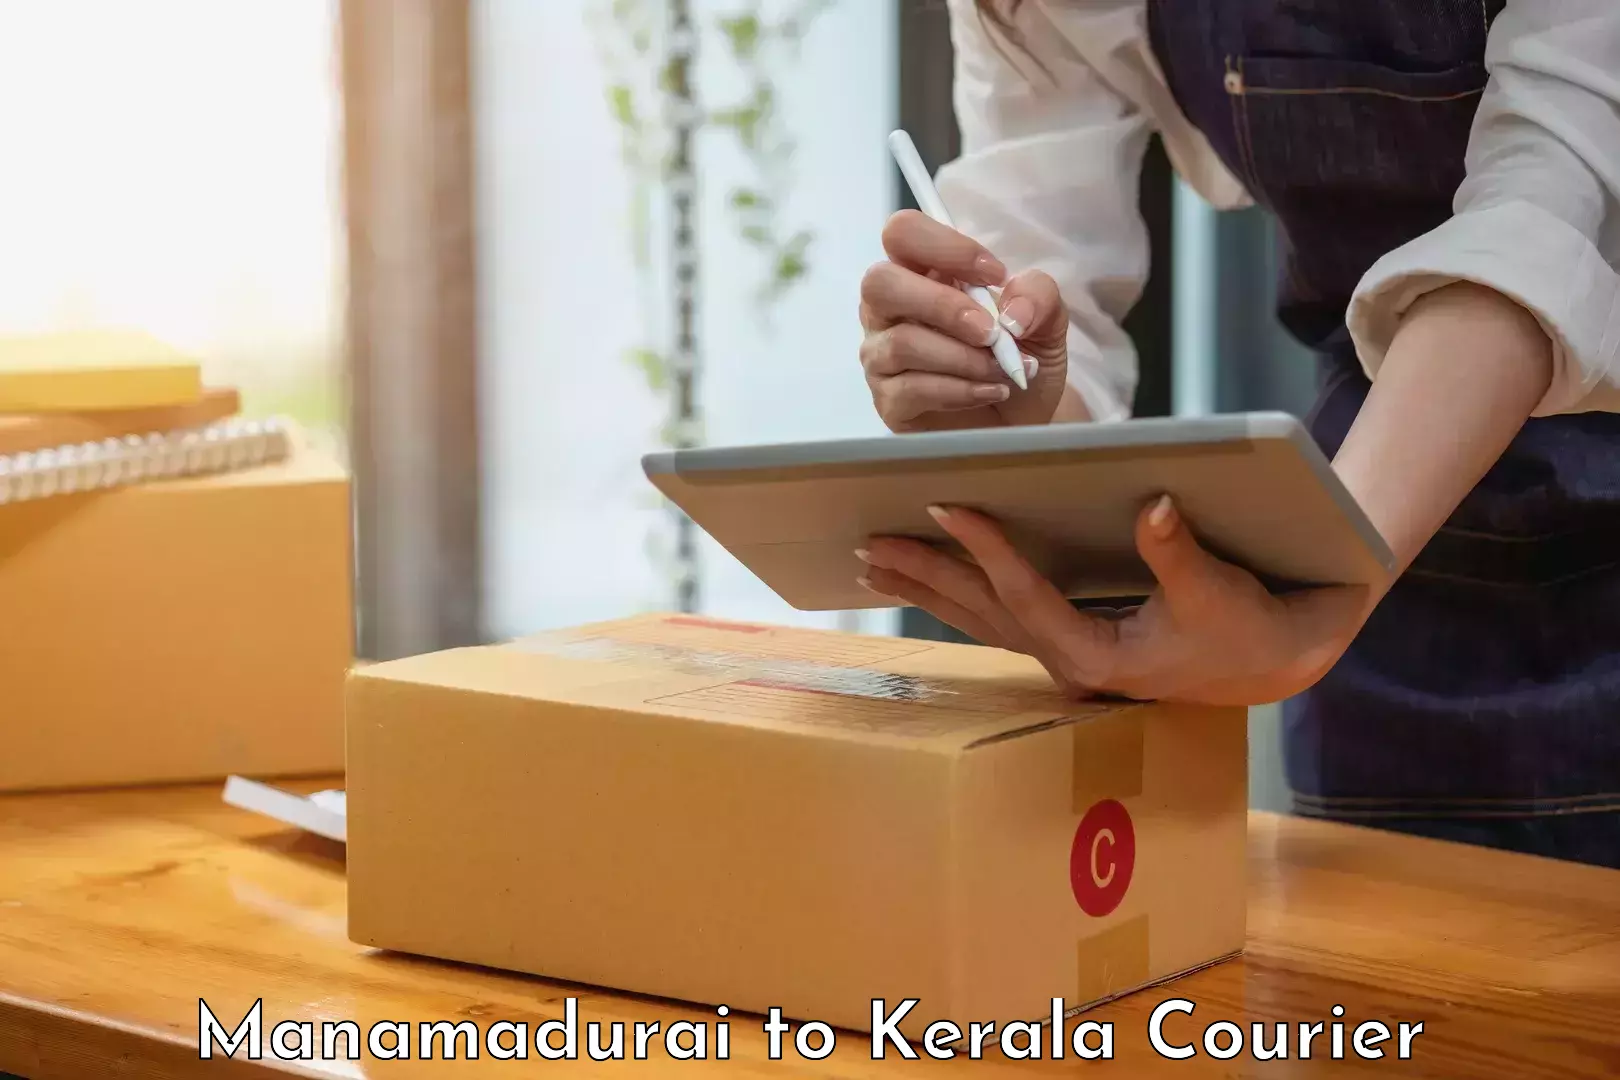 Same-day delivery options Manamadurai to Kerala